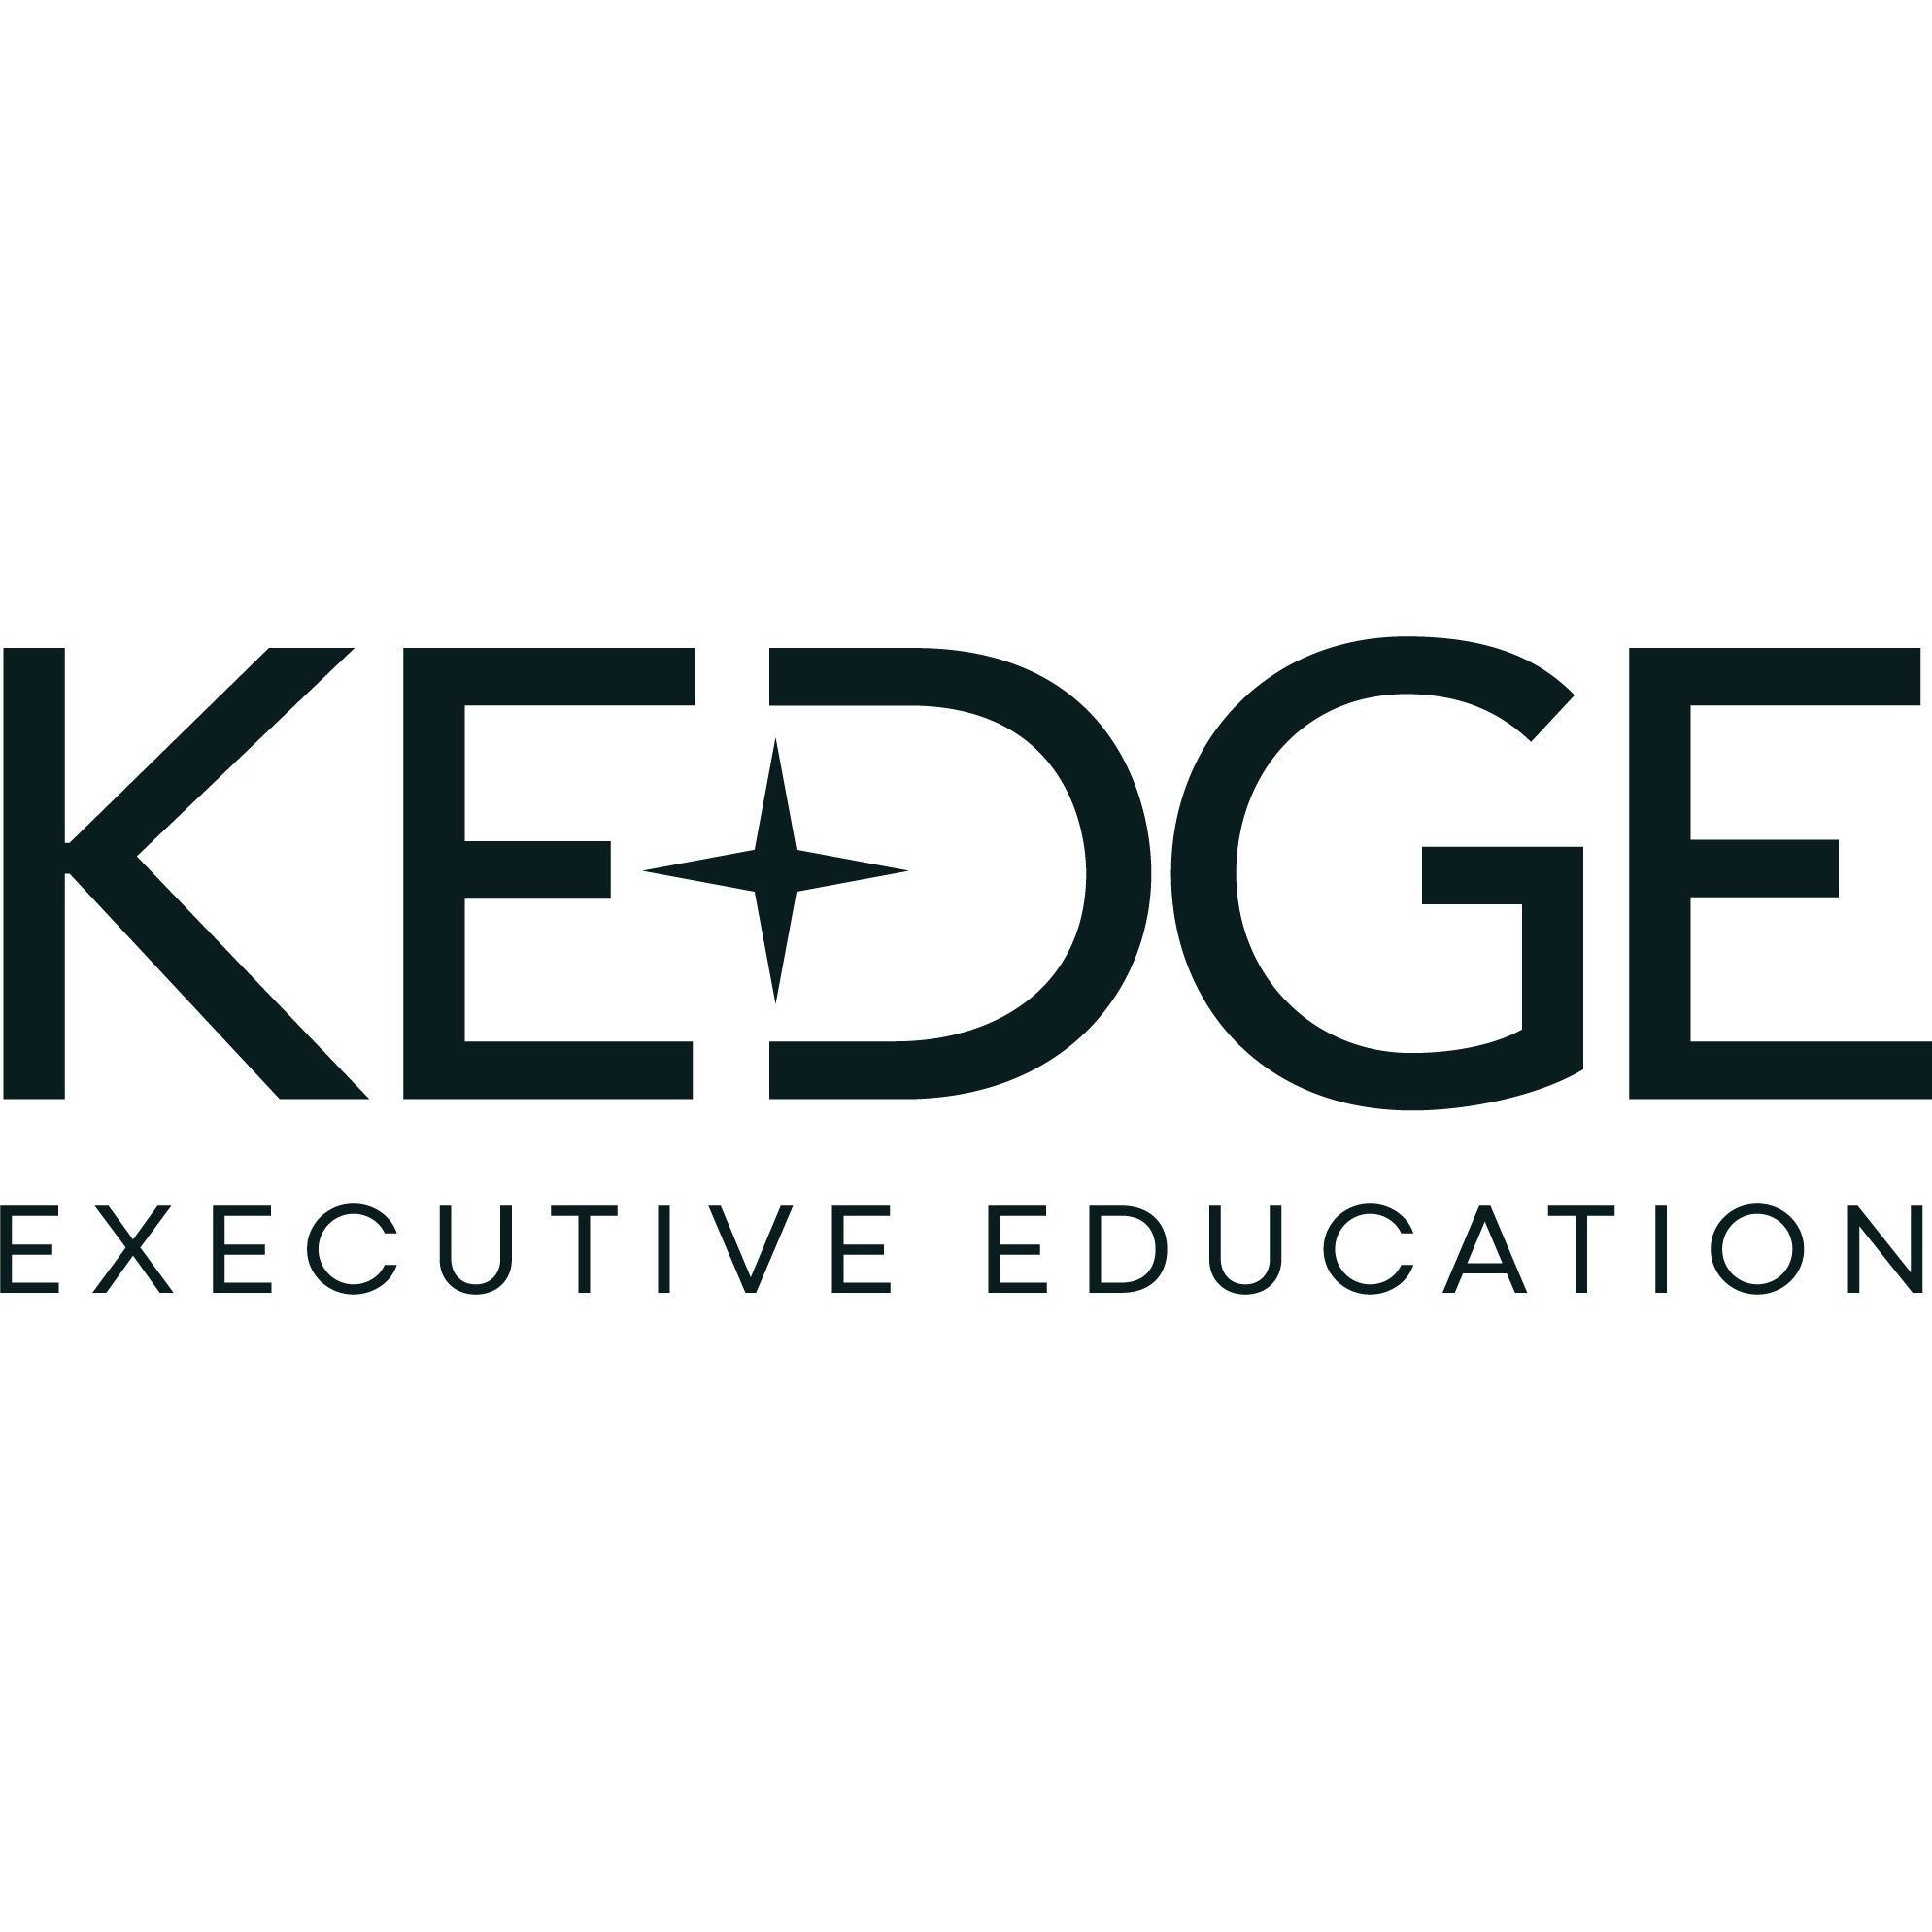 KEDGE Business School